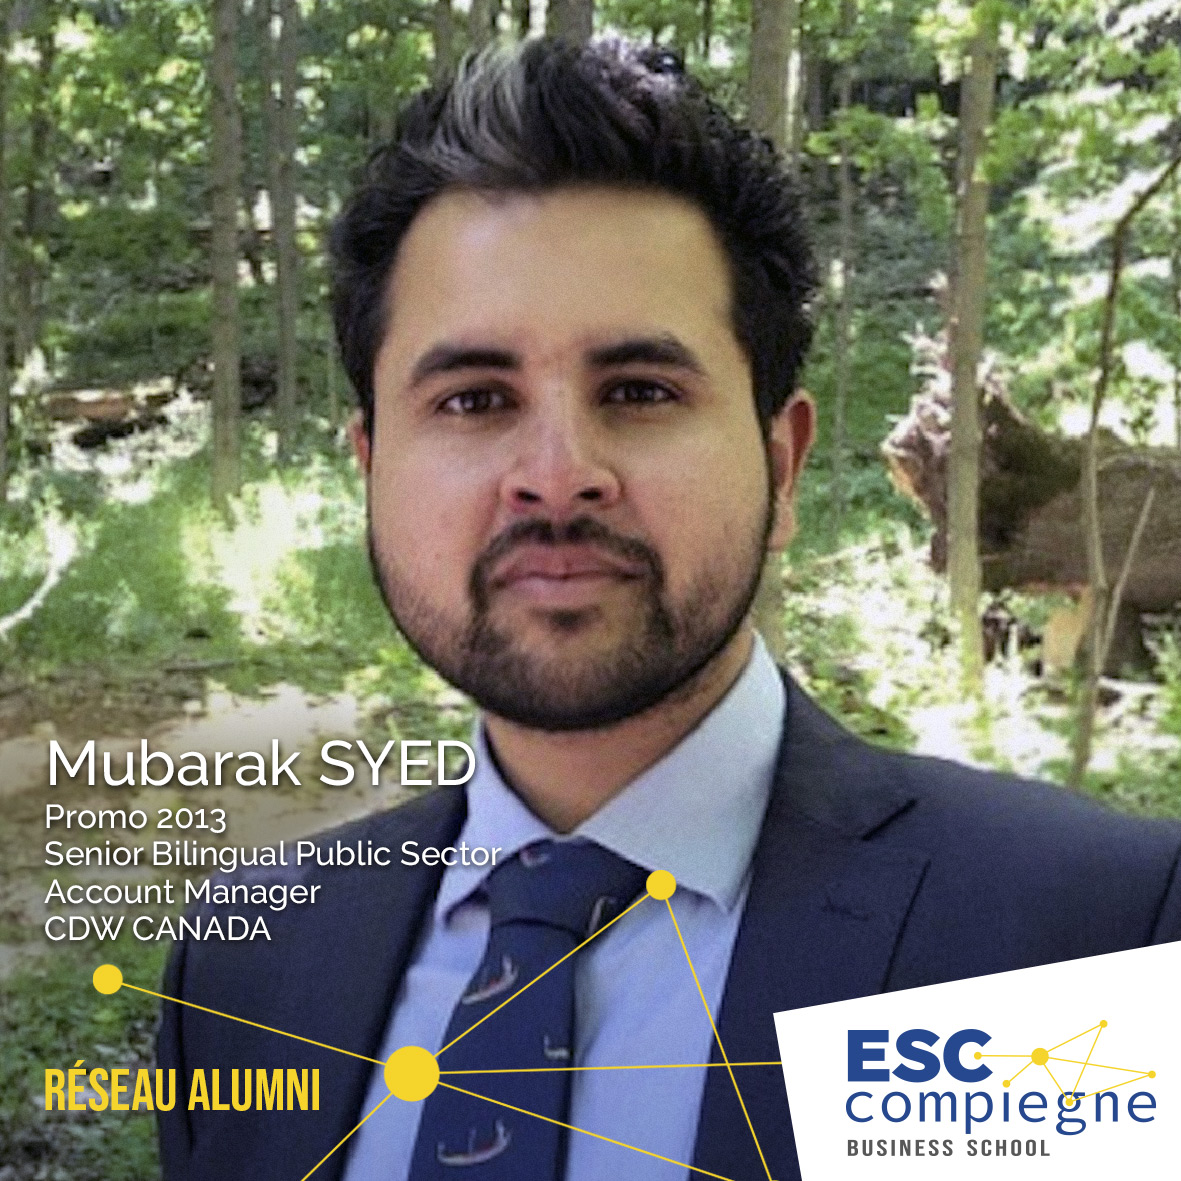 ESCC-Mubarak-Syed